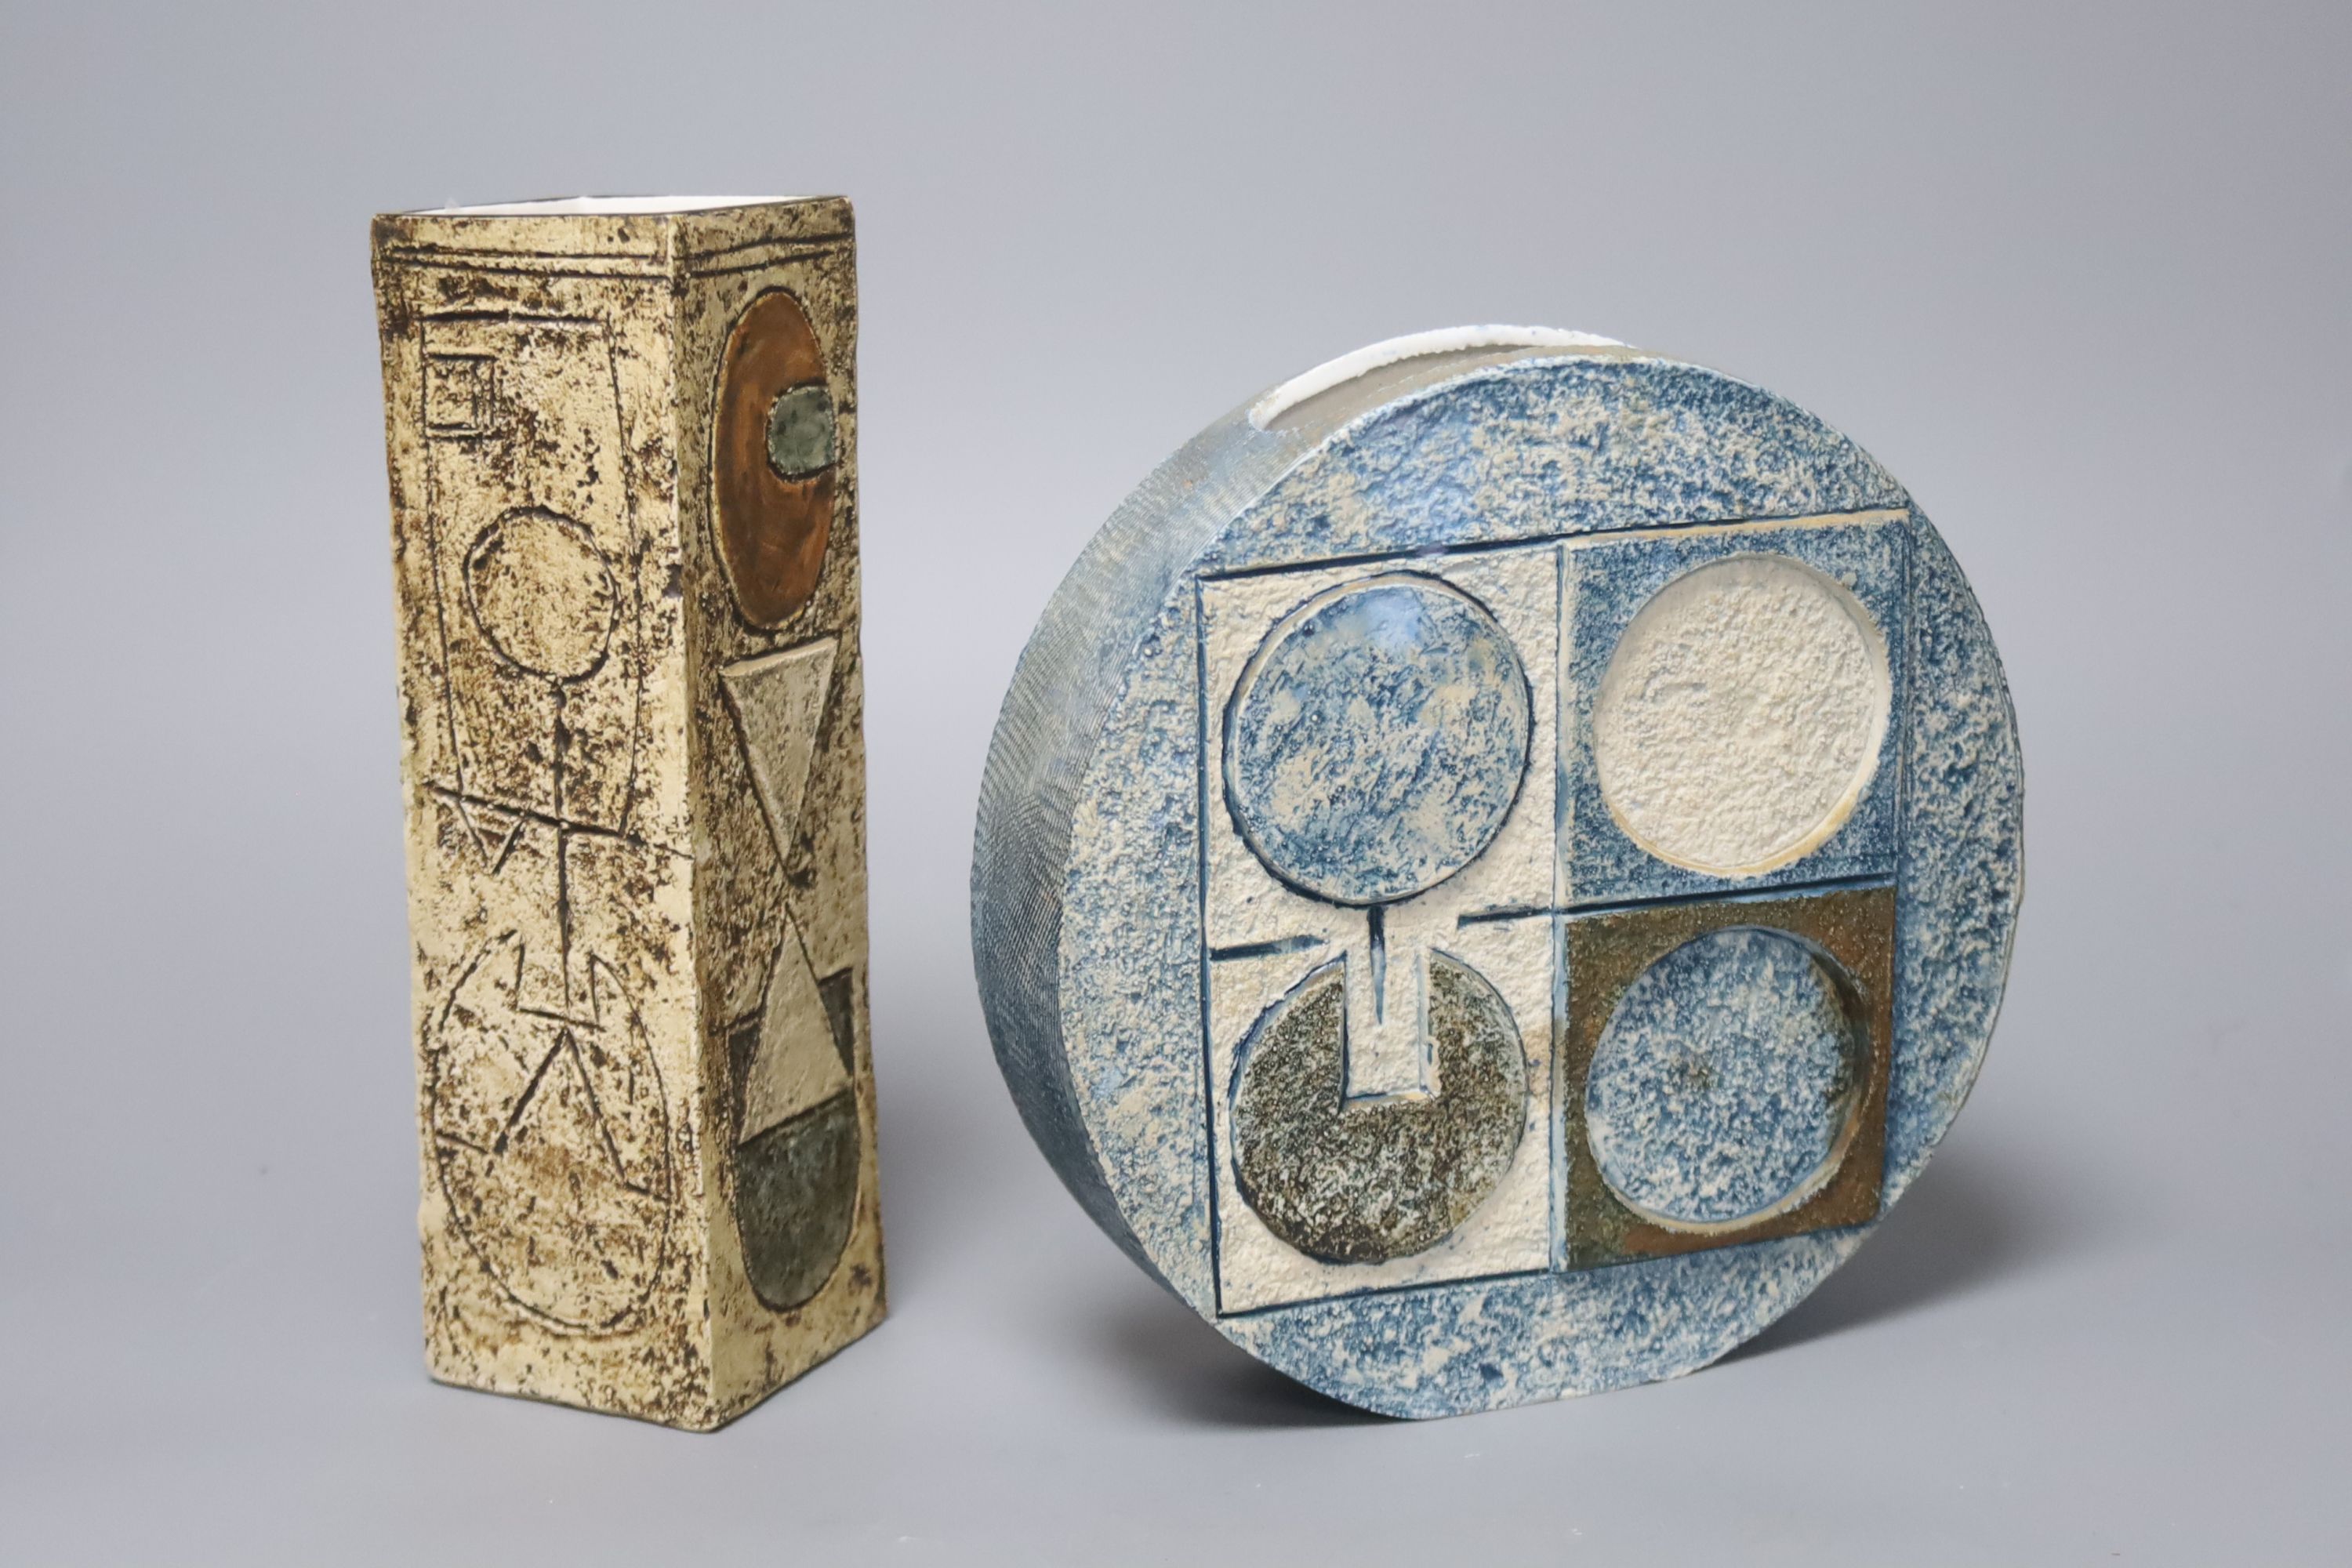 A Troika slab vase by Penny Black, together with a blue Troika wheel vase, monogrammed HC, tallest 22cm